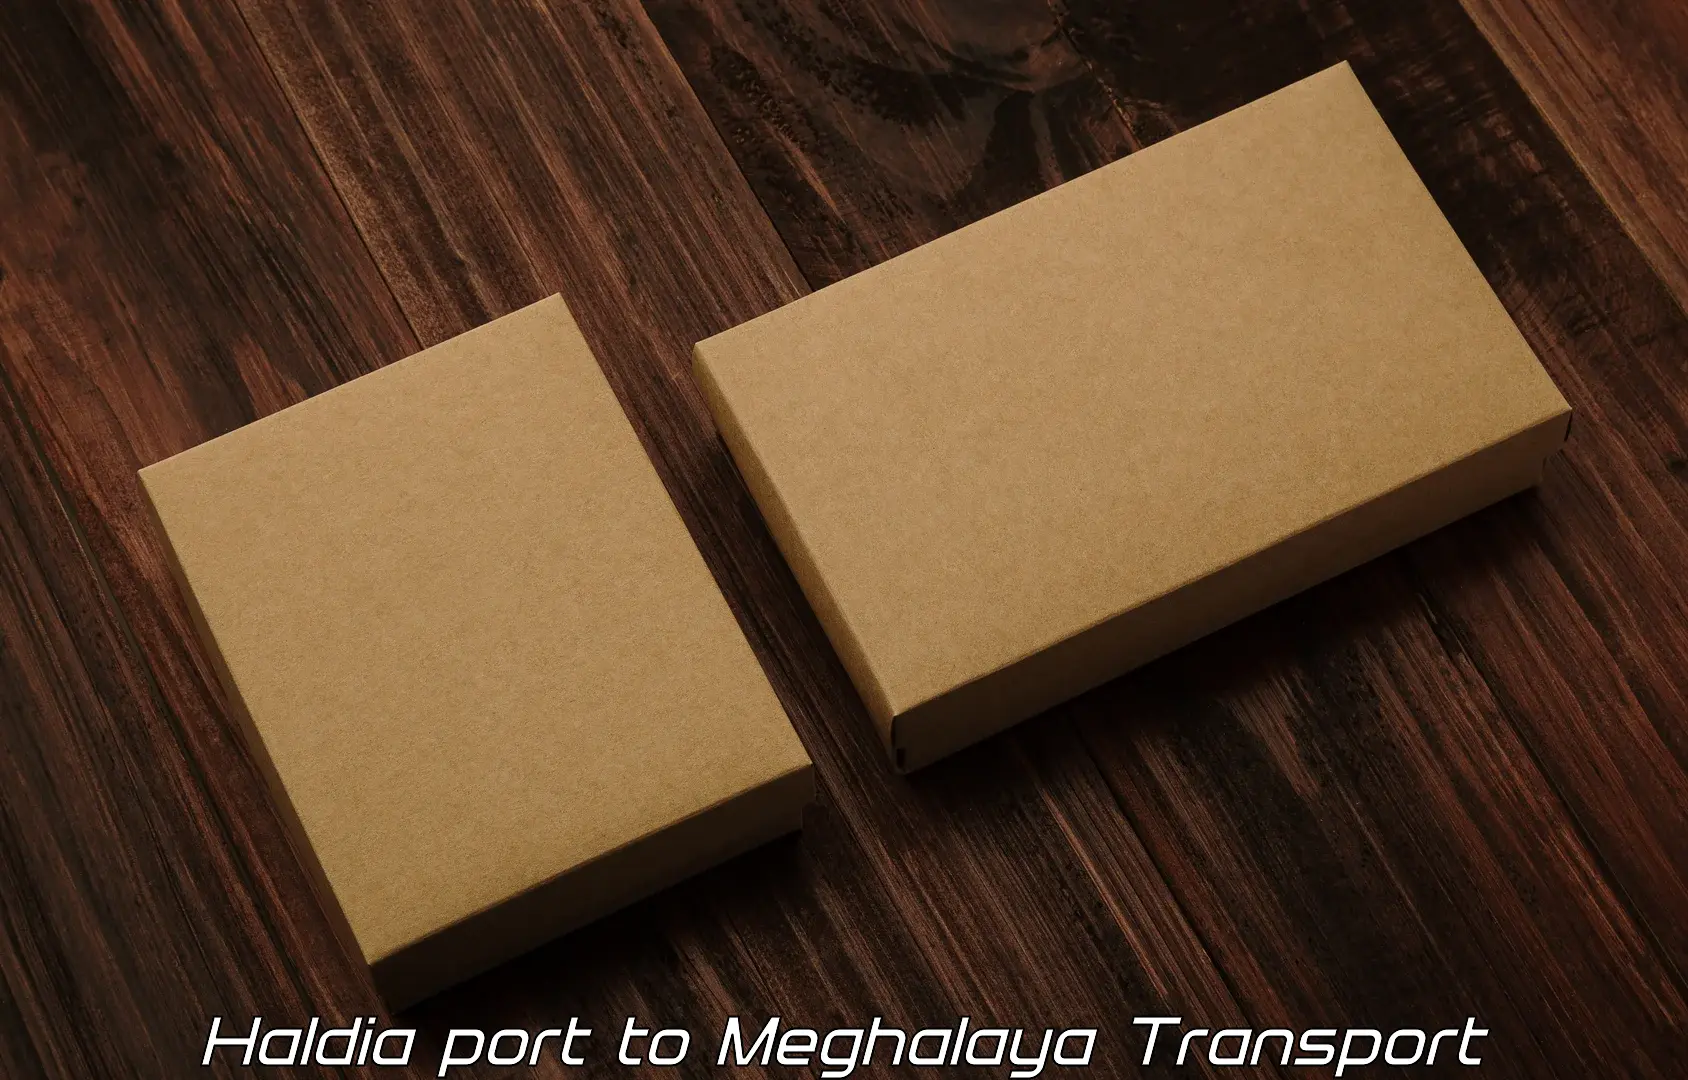 Vehicle parcel service Haldia port to Meghalaya